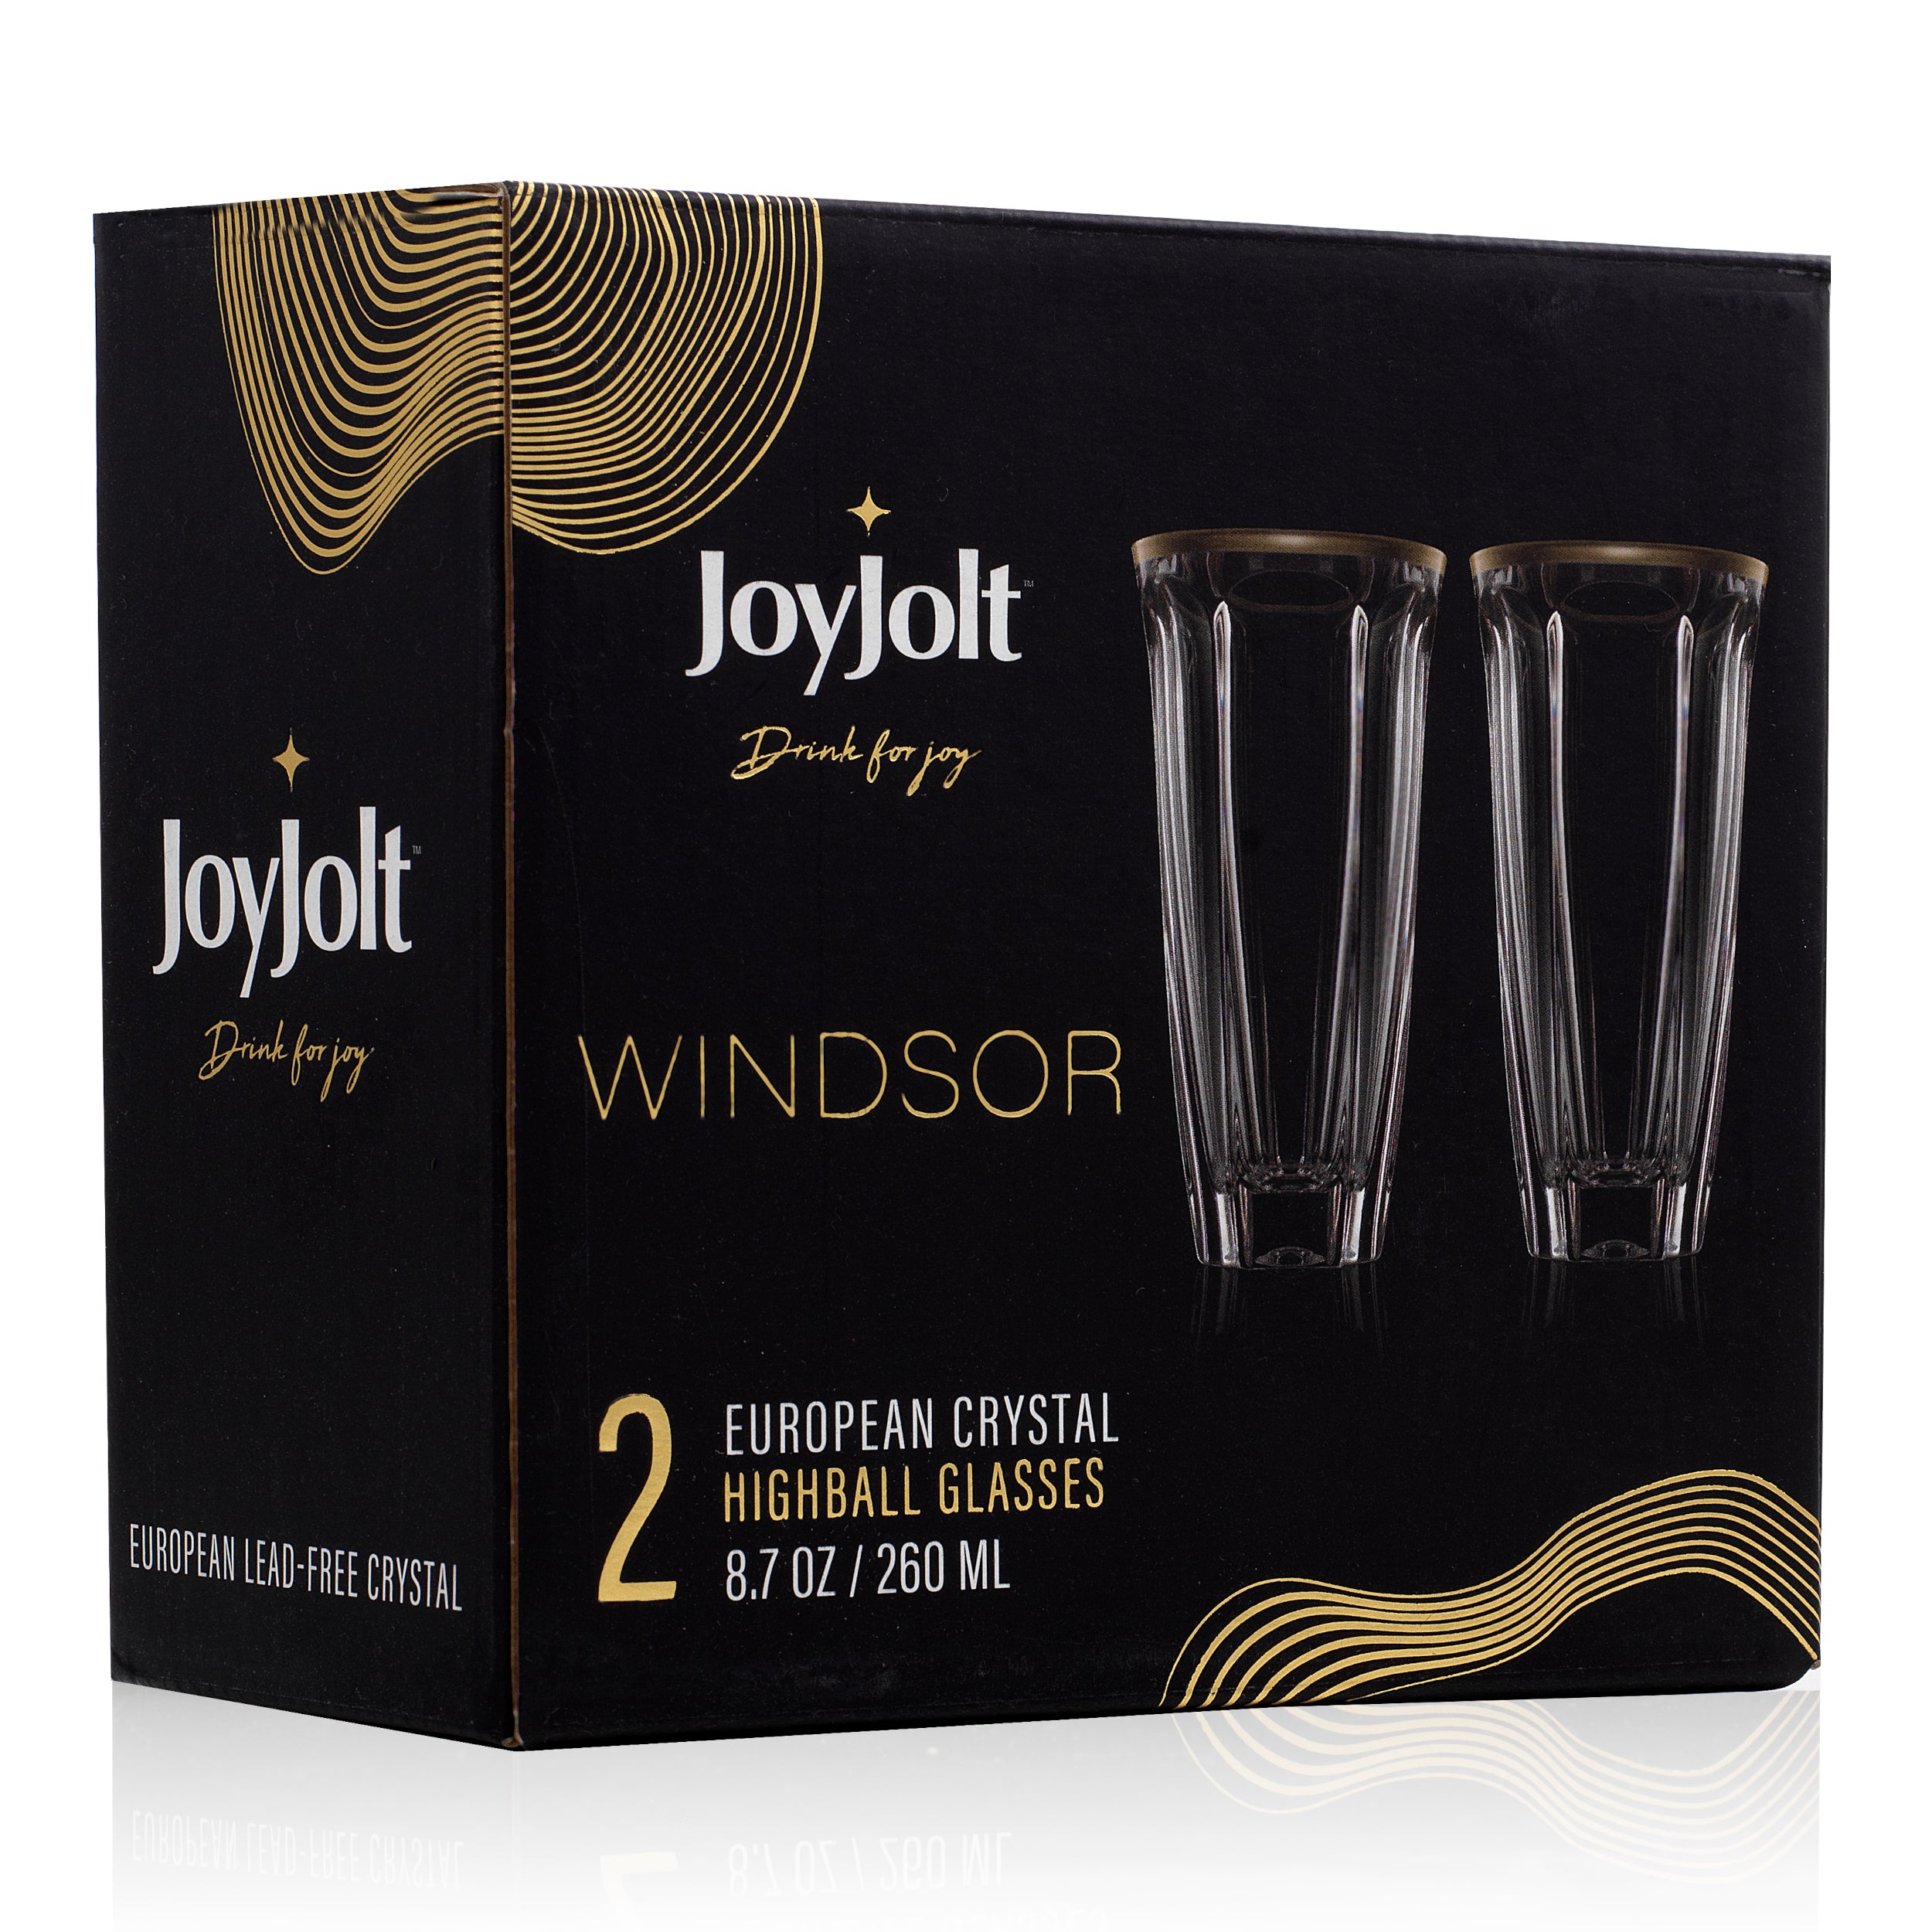 Windsor European Crystal Lead-Free Glasses - Set of 2